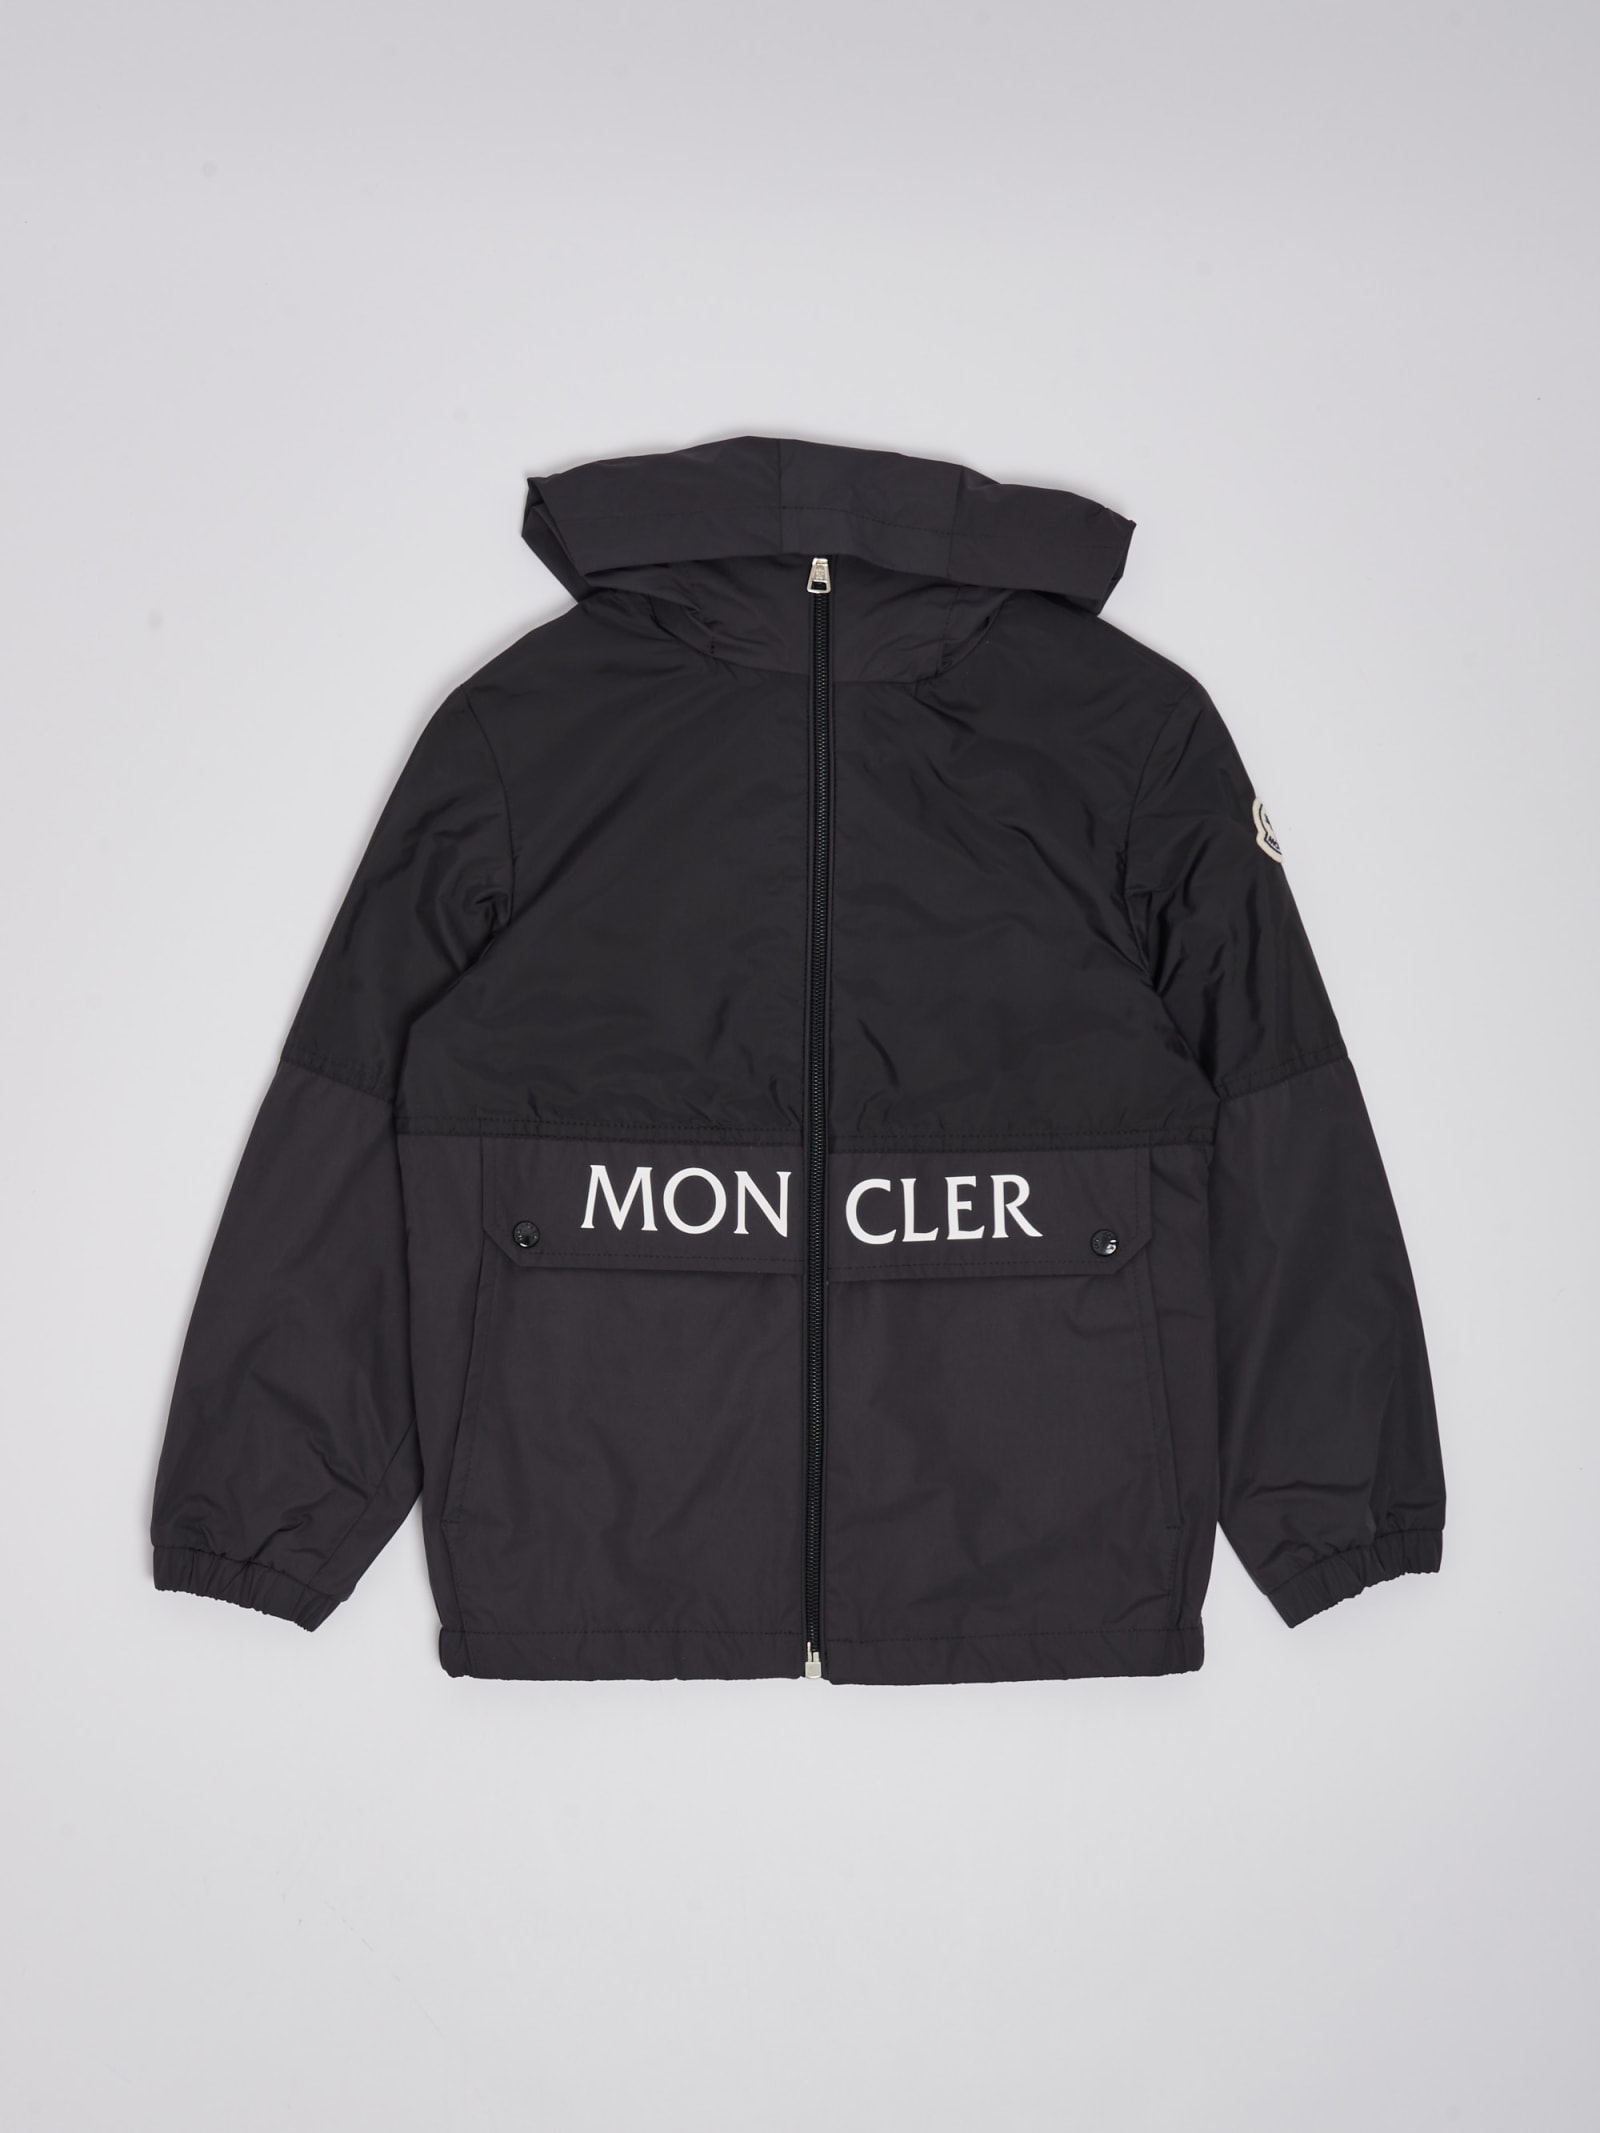 Moncler Jacket Jacket